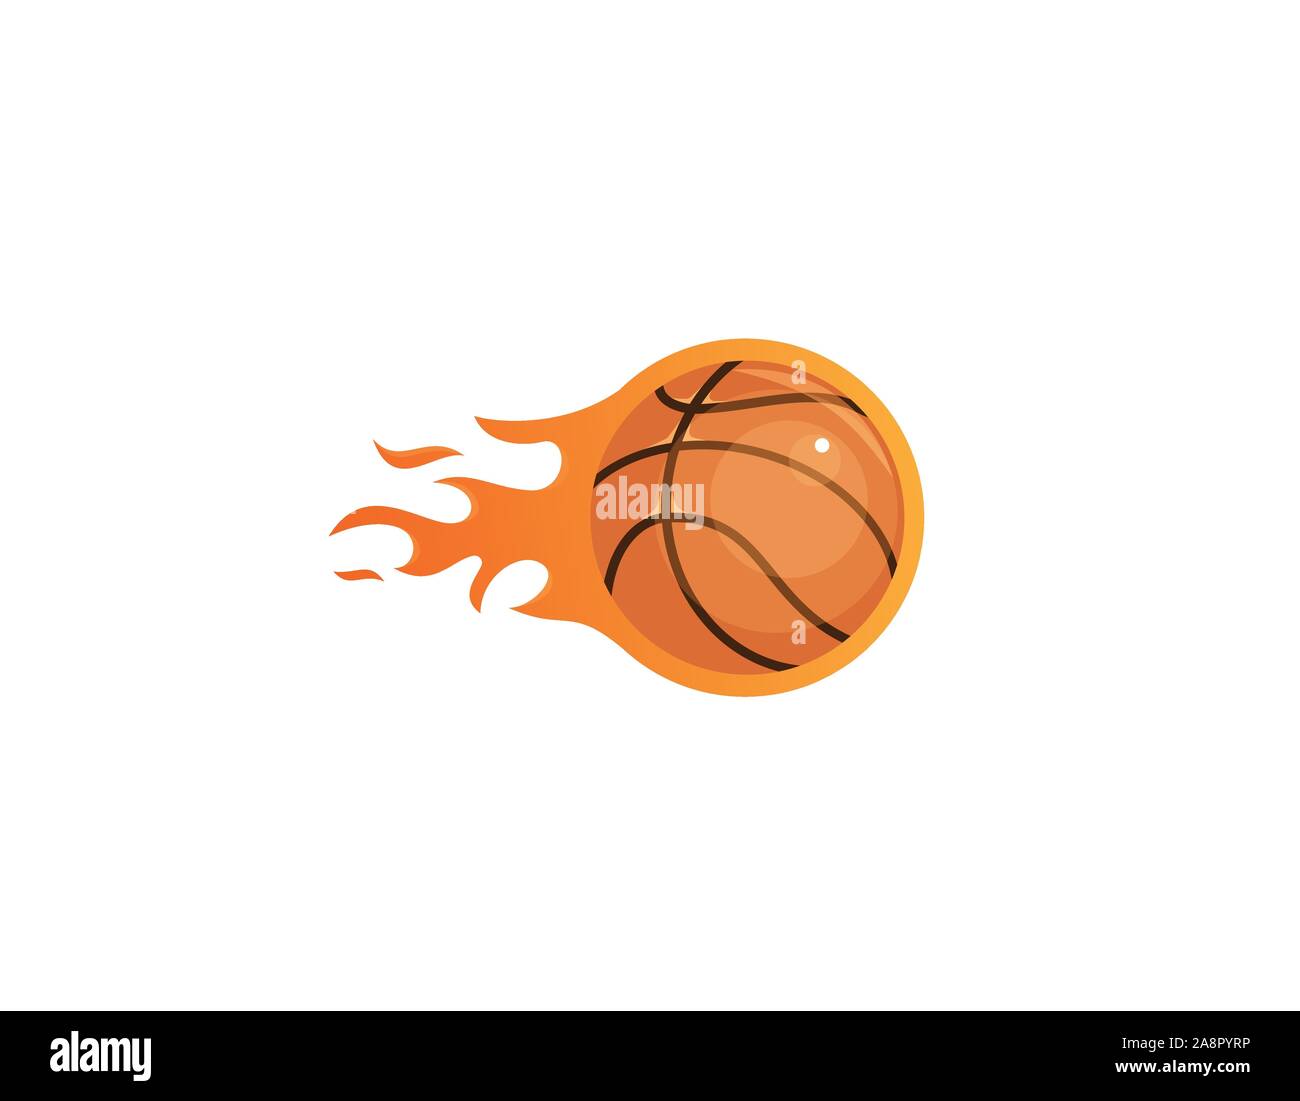 Basket-ball avec des flammes logo design Image Vectorielle Stock - Alamy